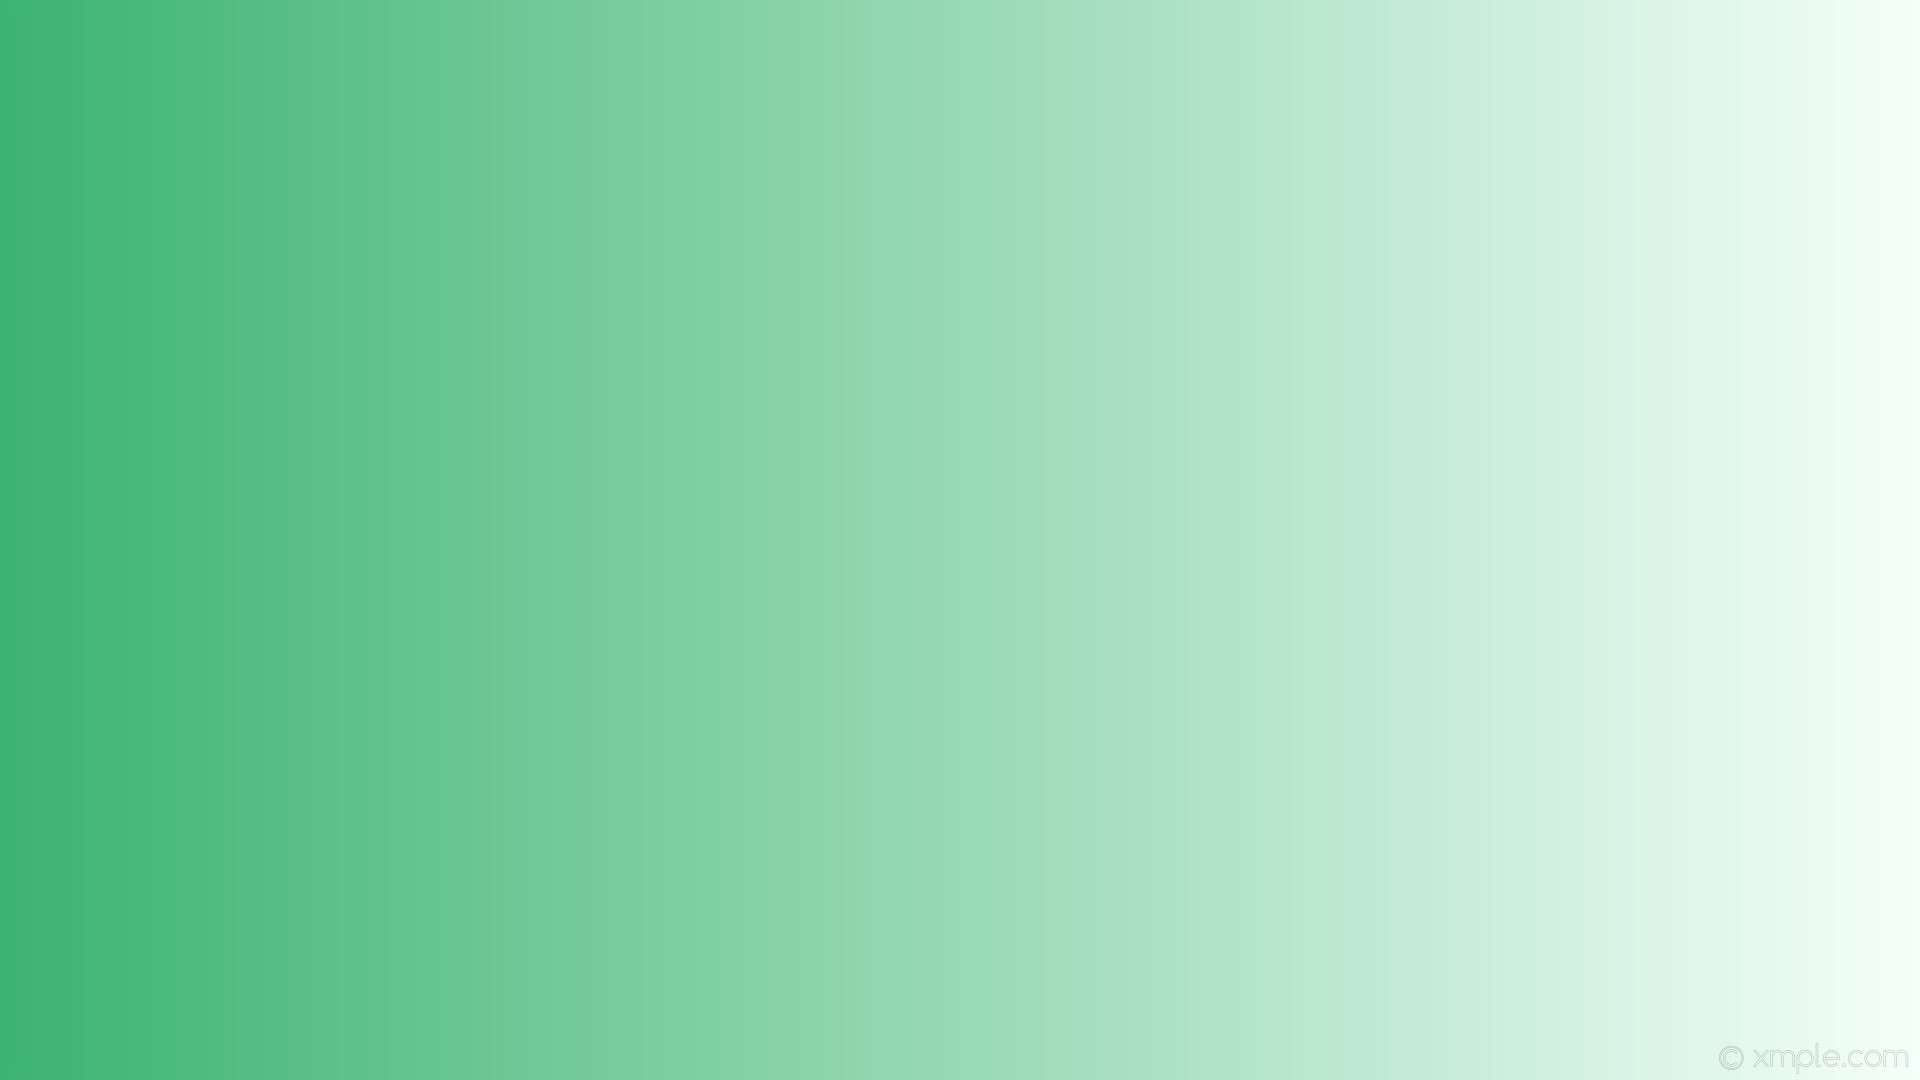 1920x1080 wallpaper linear gradient green white mint cream medium sea green #f5fffa  #3cb371 0Â°